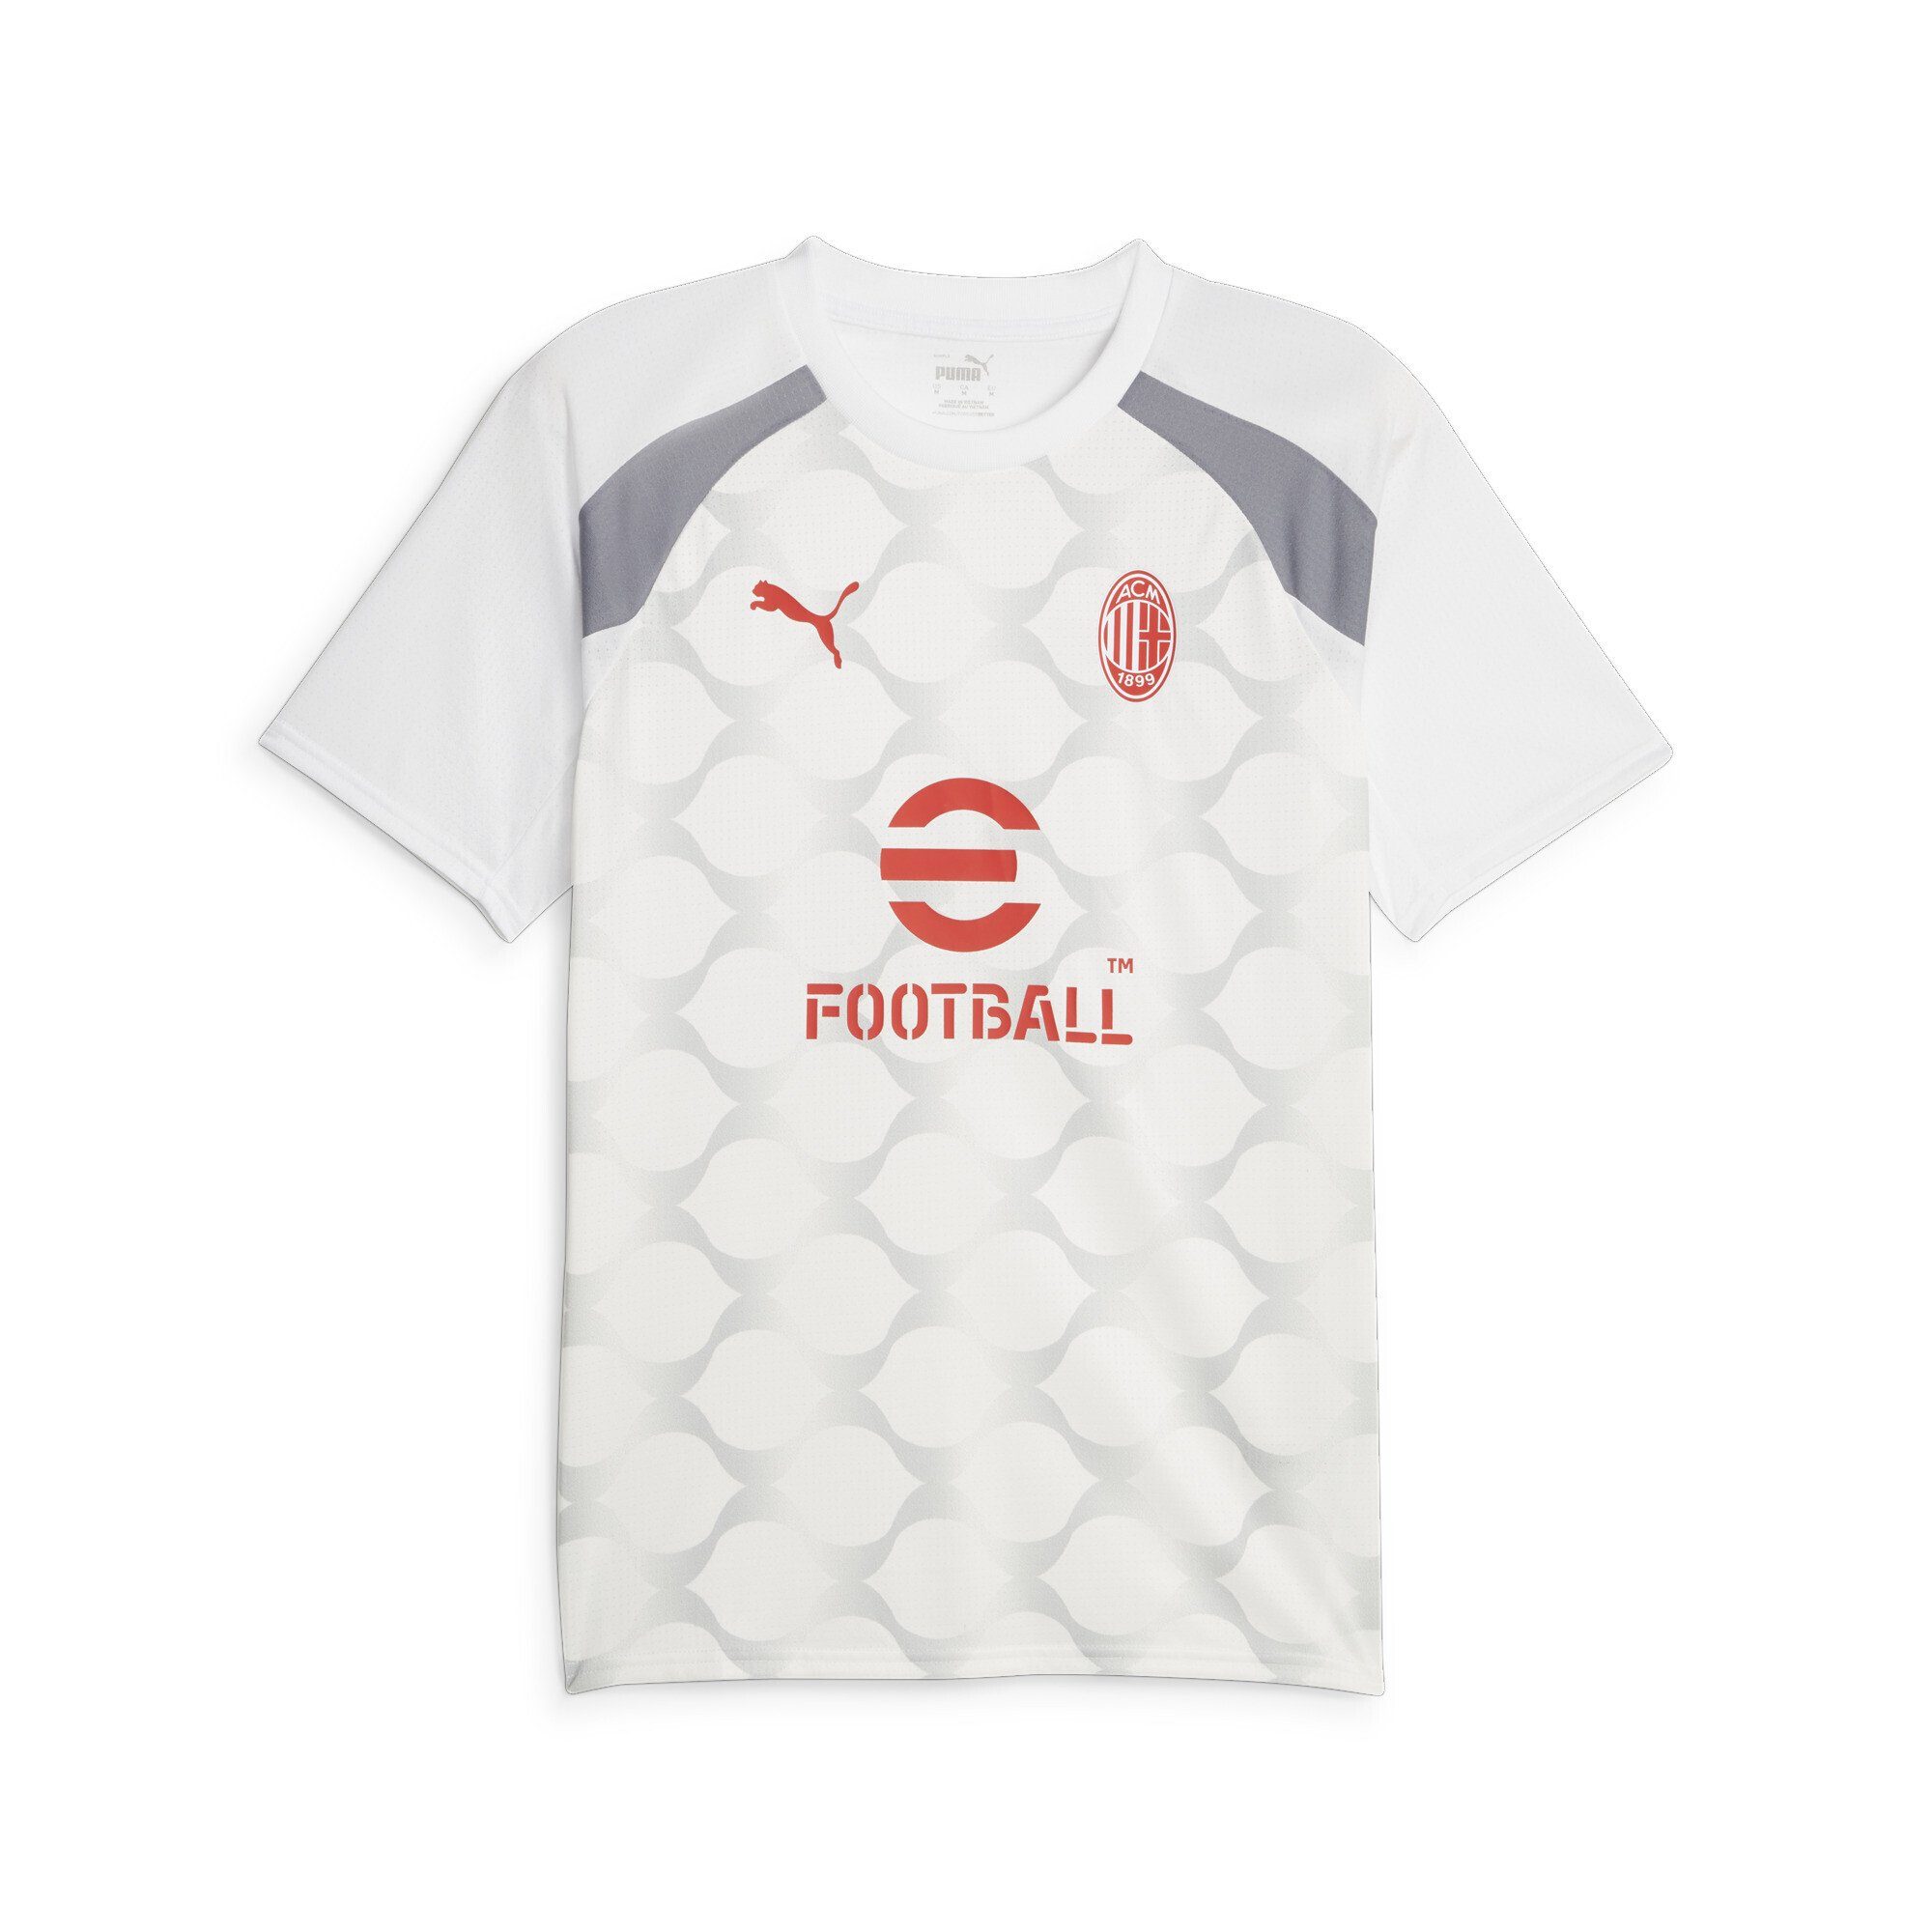 PUMA Trainingsshirt AC Milan Aufwärmtrikot Herren White Gray Tile